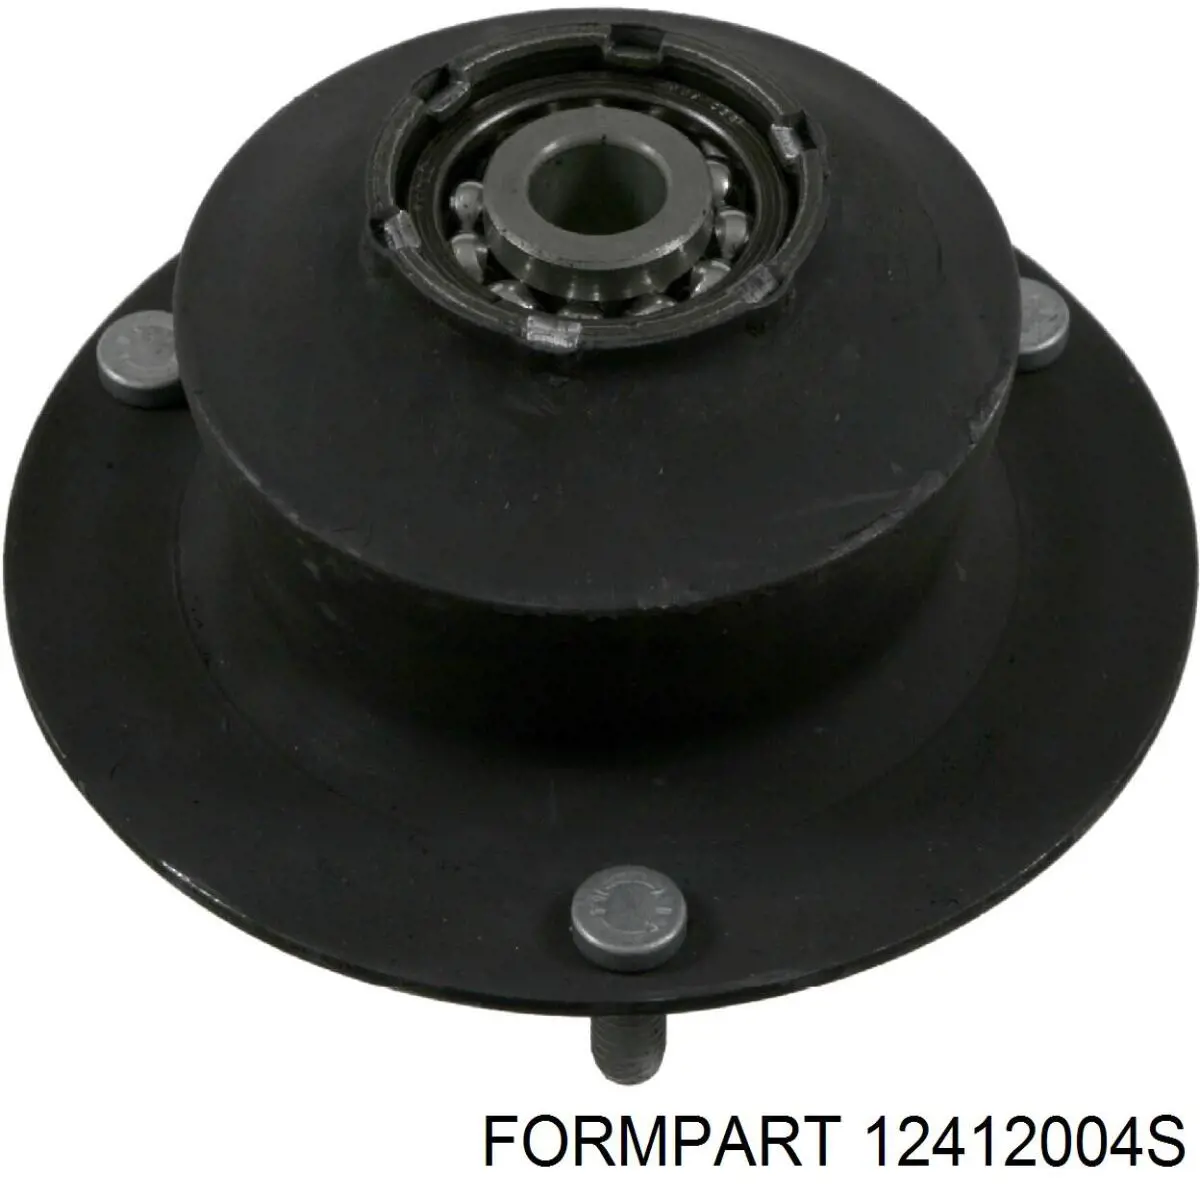 12412004S Formpart/Otoform опора амортизатора переднего